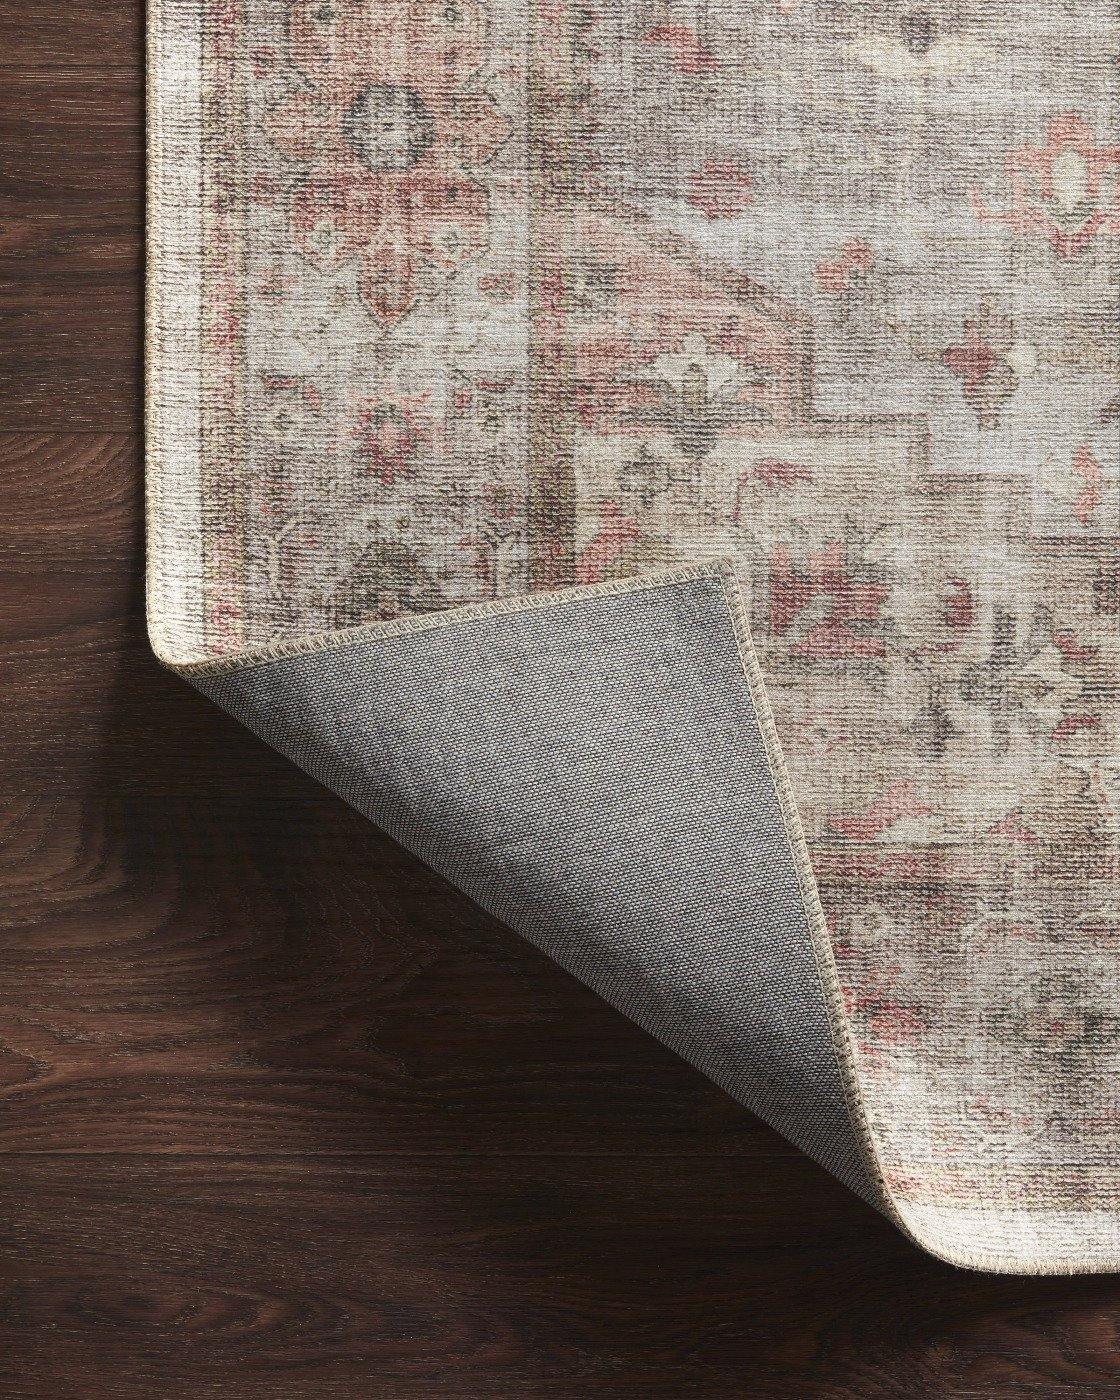 Heidi Dove / Spice Rug - Reimagine Designs - Pattern, rugs